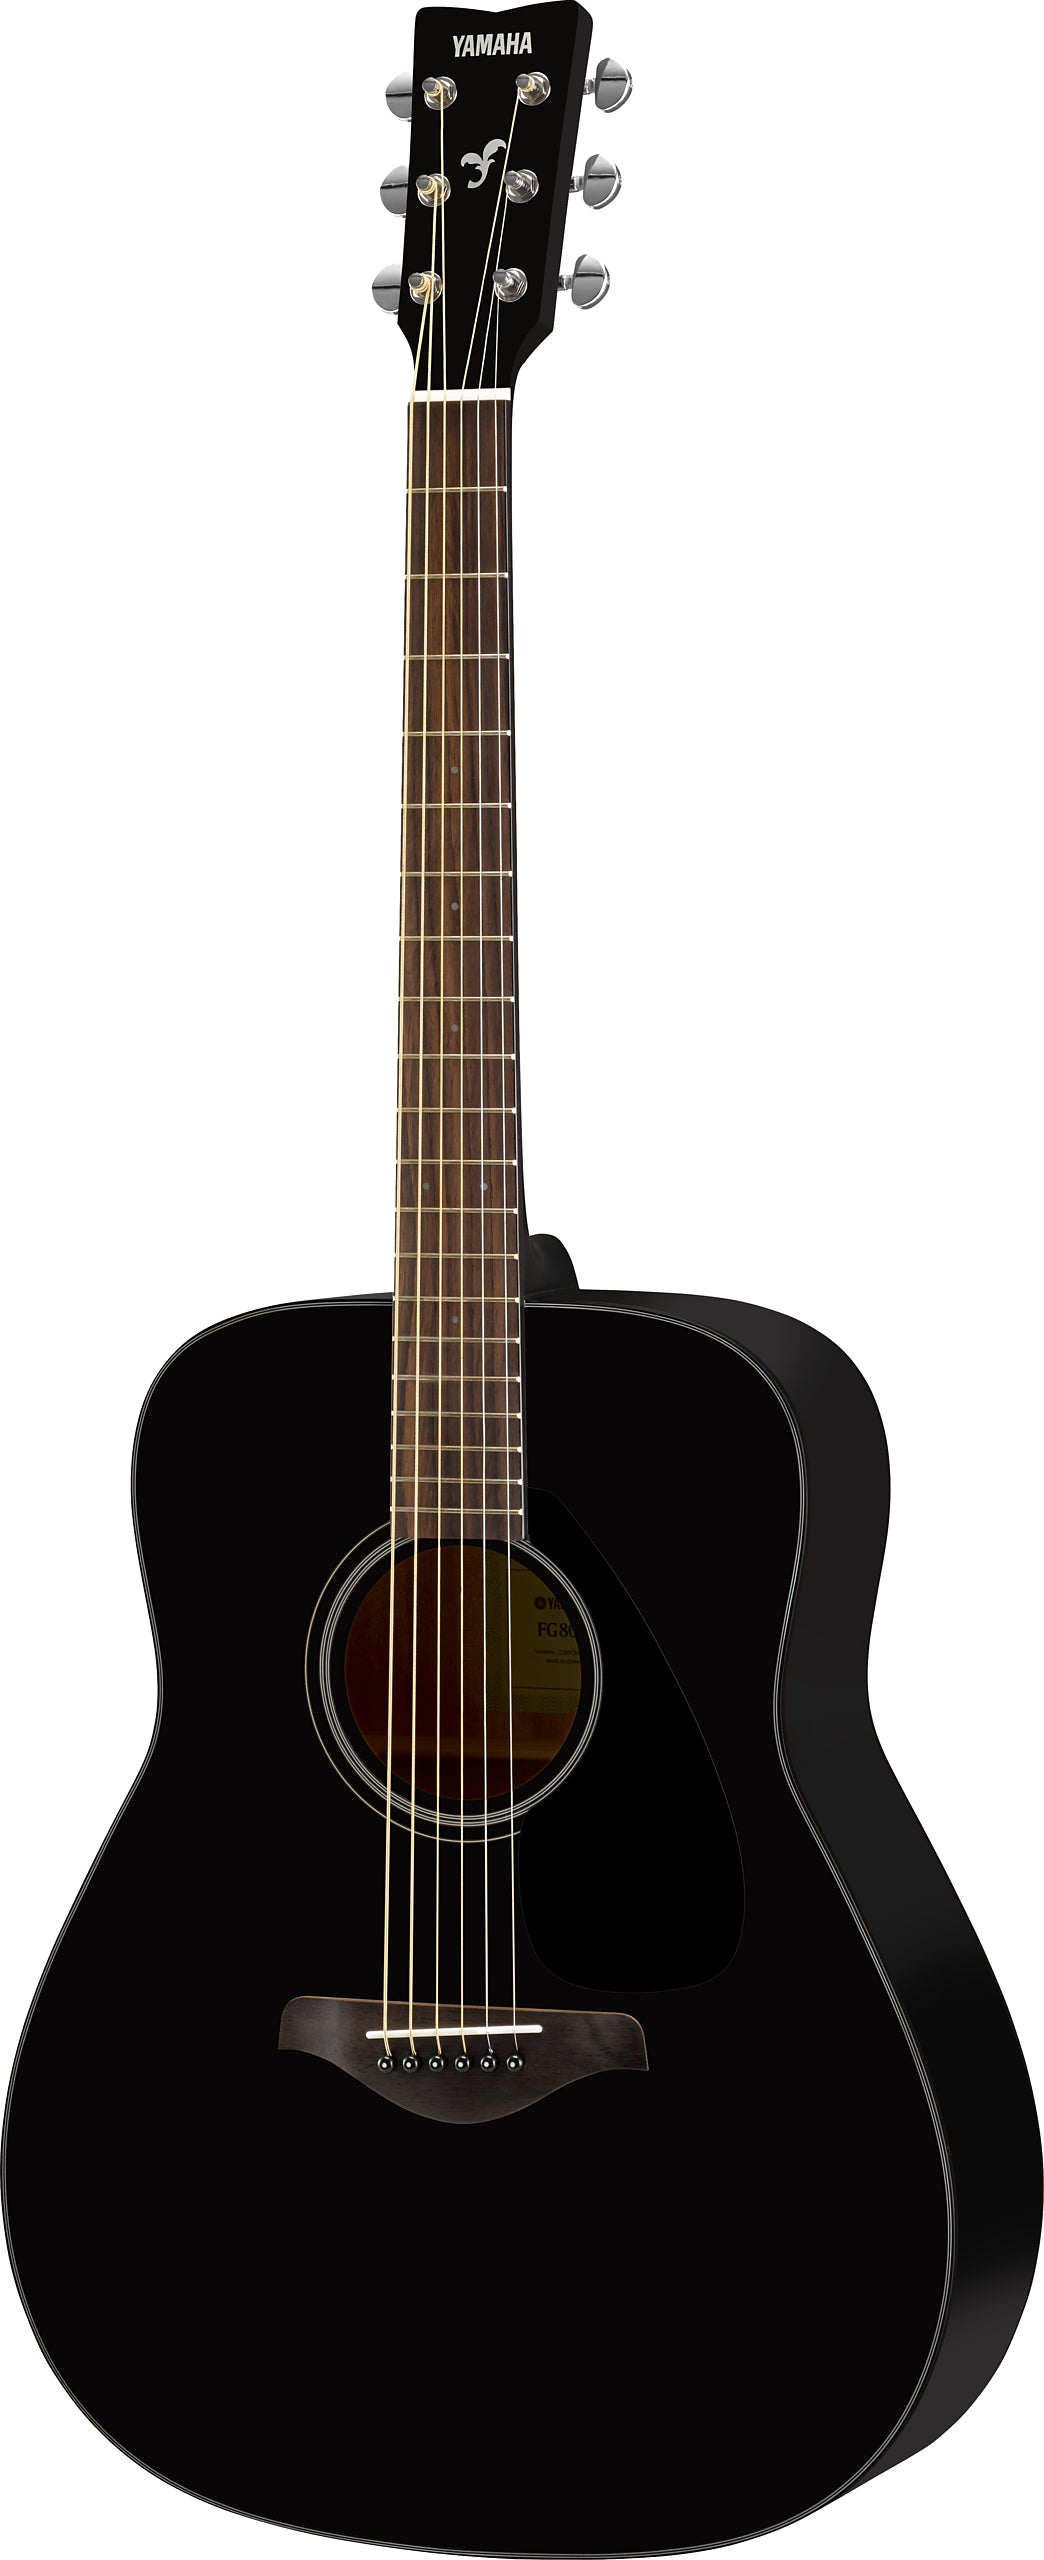 Yamaha FG800 BL Acoustic Guitar - Black